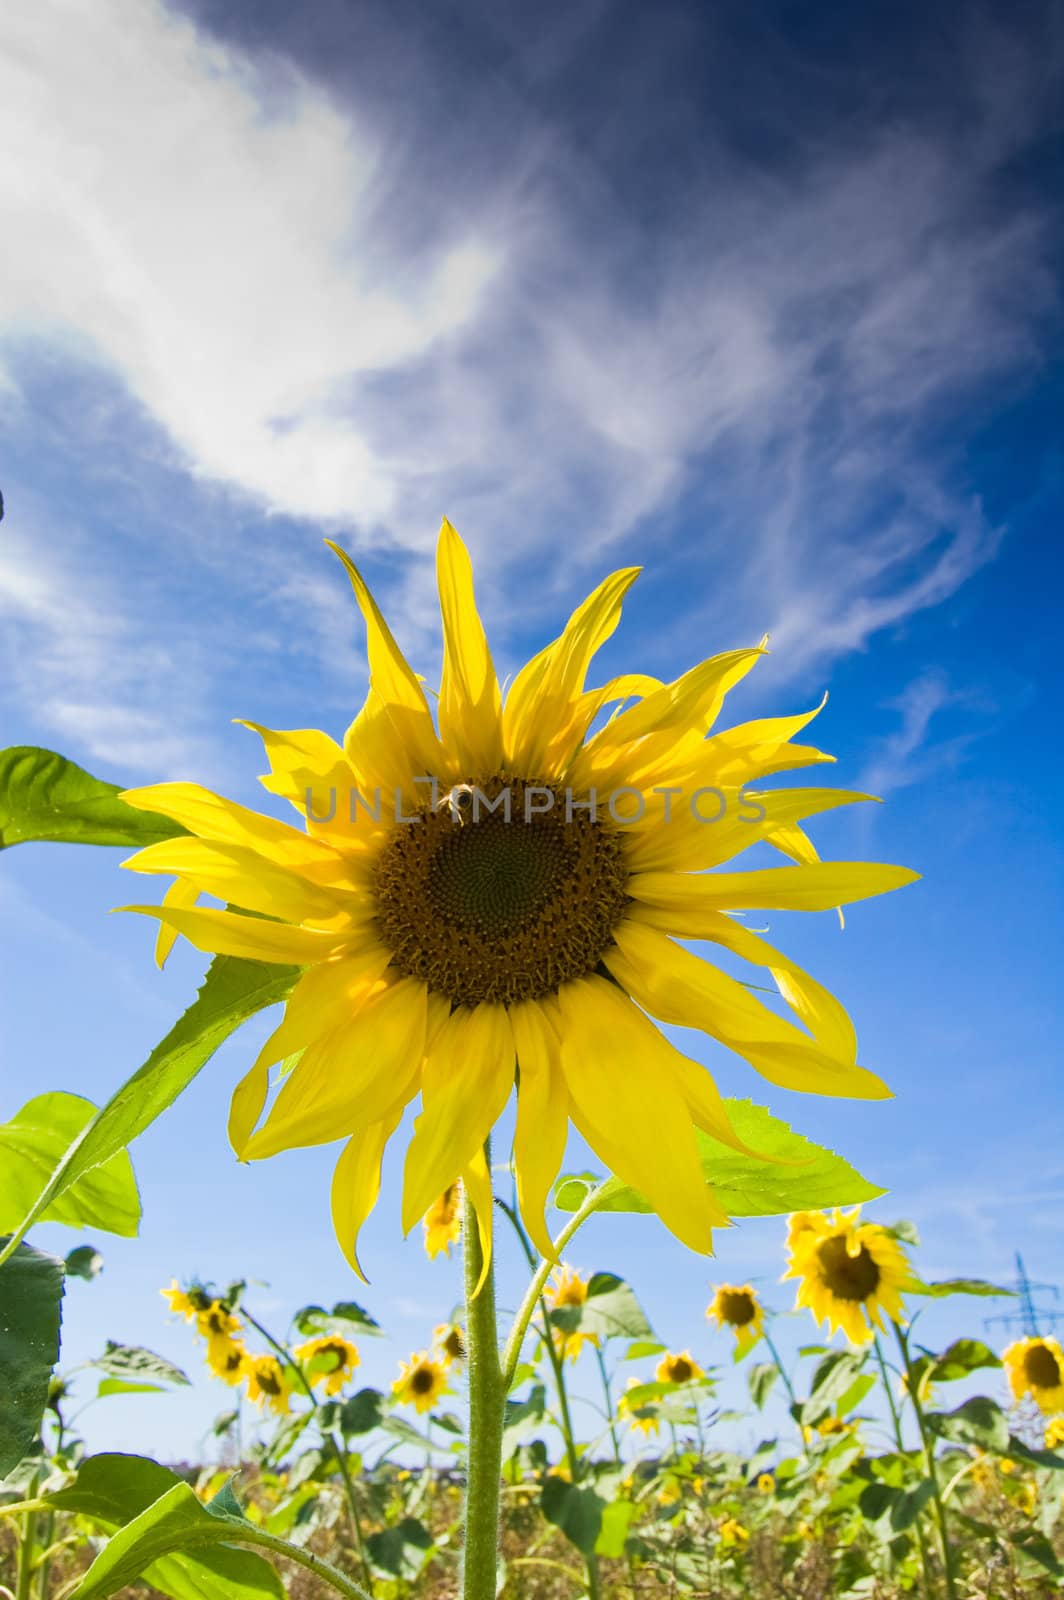 beautiful sunflowers with blue sky